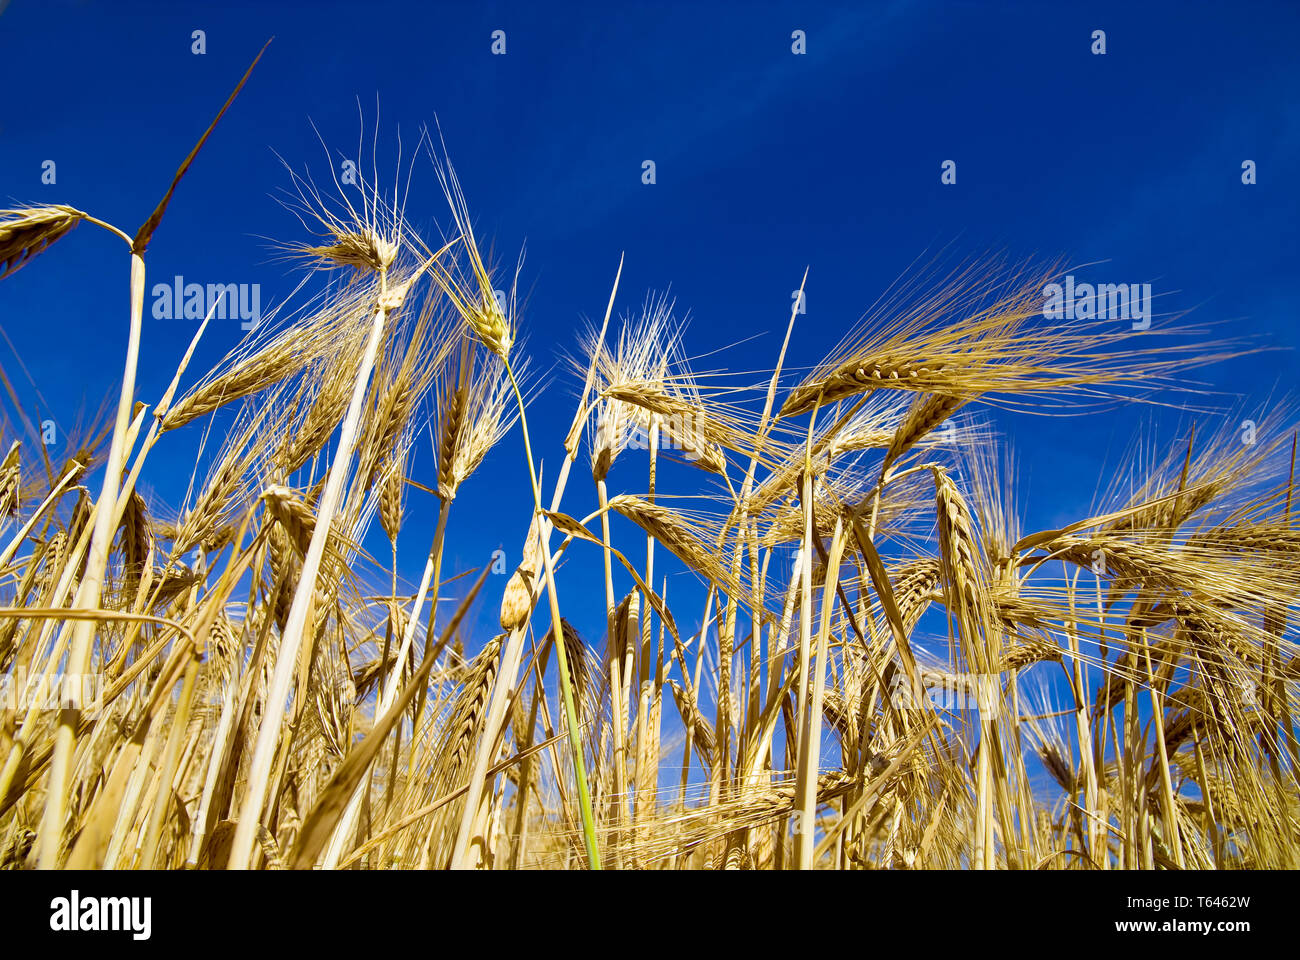 Barley, Hordeum vulgare Stock Photo